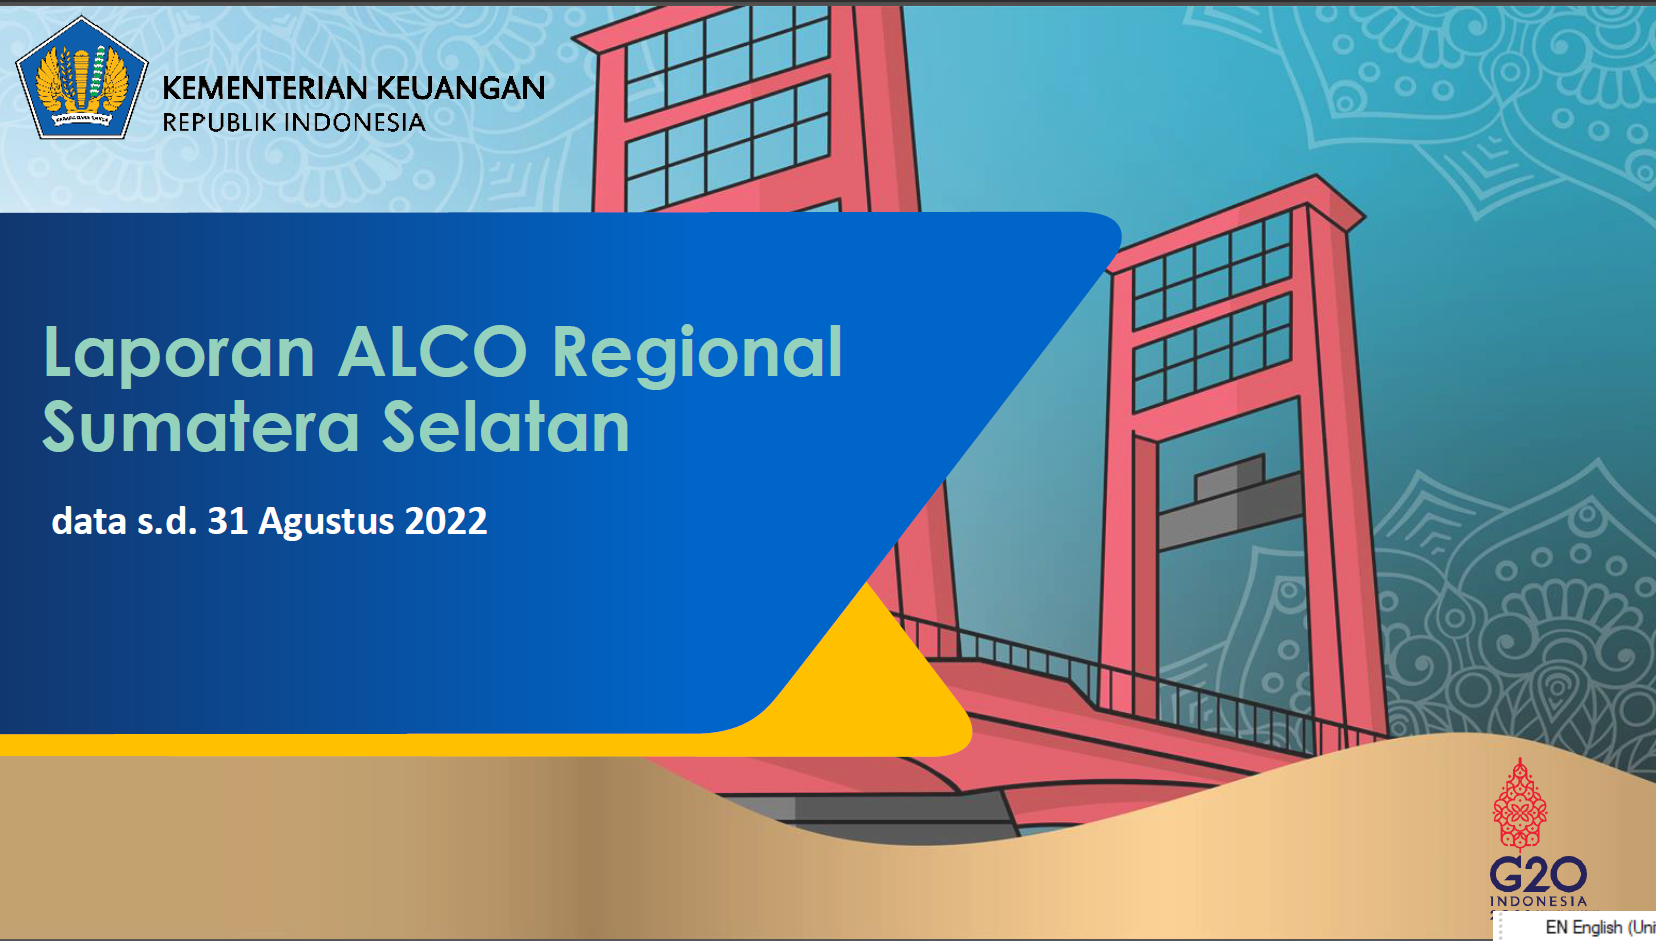 Press Release ALCo Regional Provinsi Sumatera Selatan Periode Agustus 2022